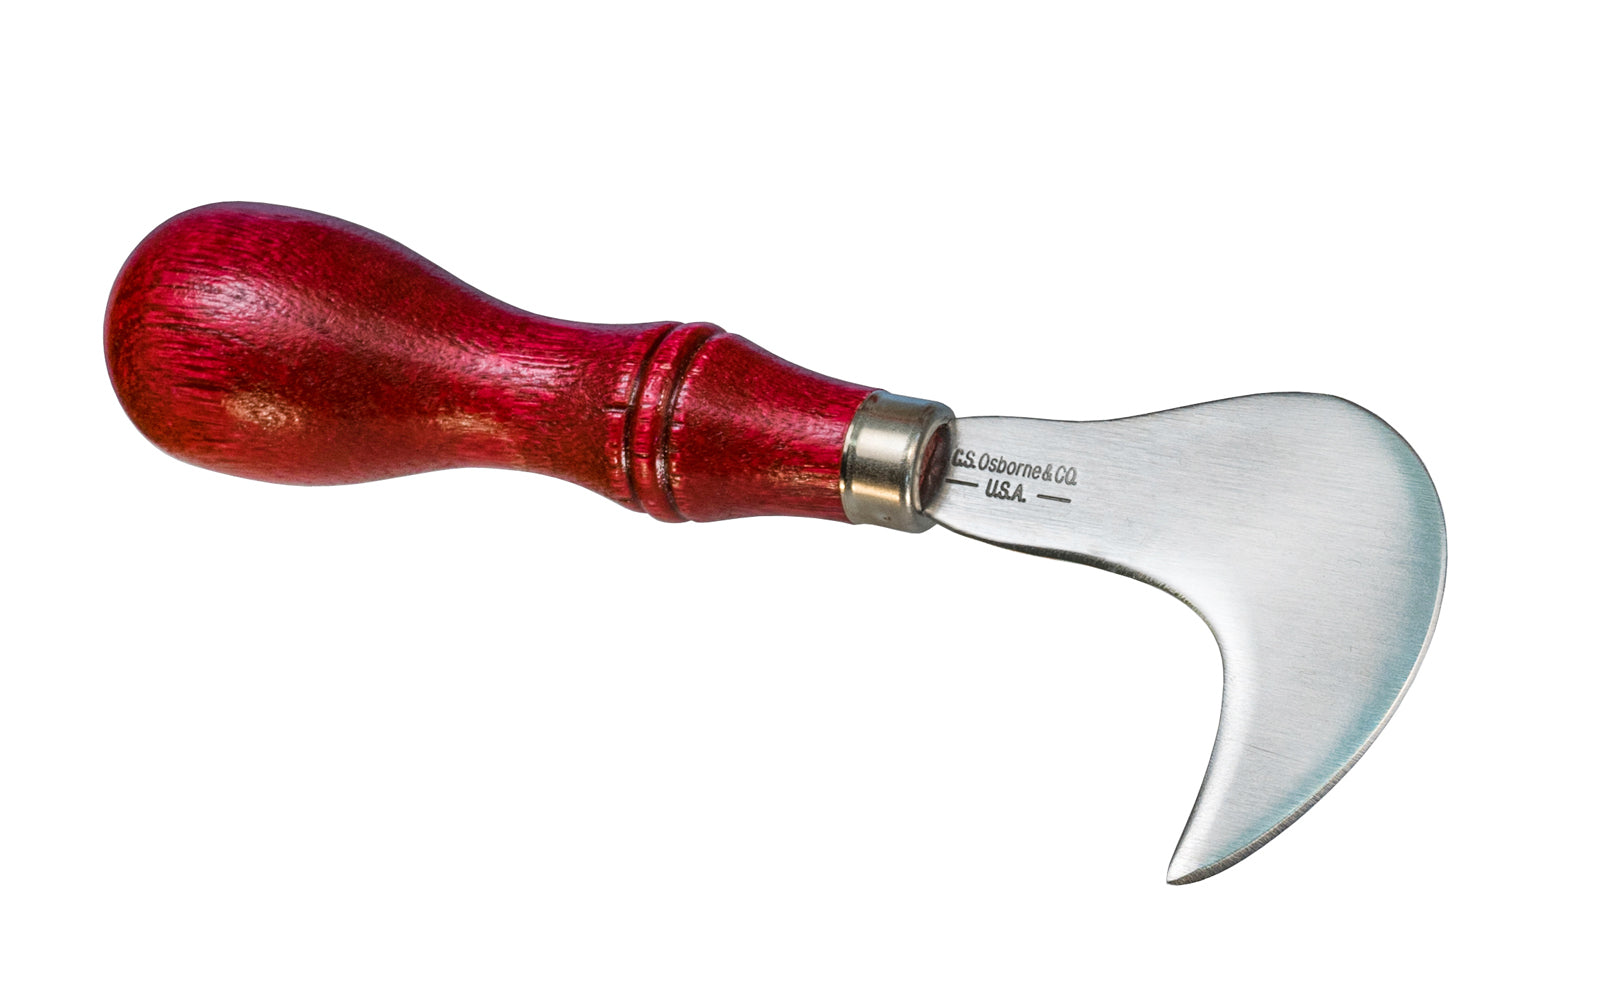 CS Osborne Lead Glass & Leather Knife ~ No. 73 – Hardwick & Sons